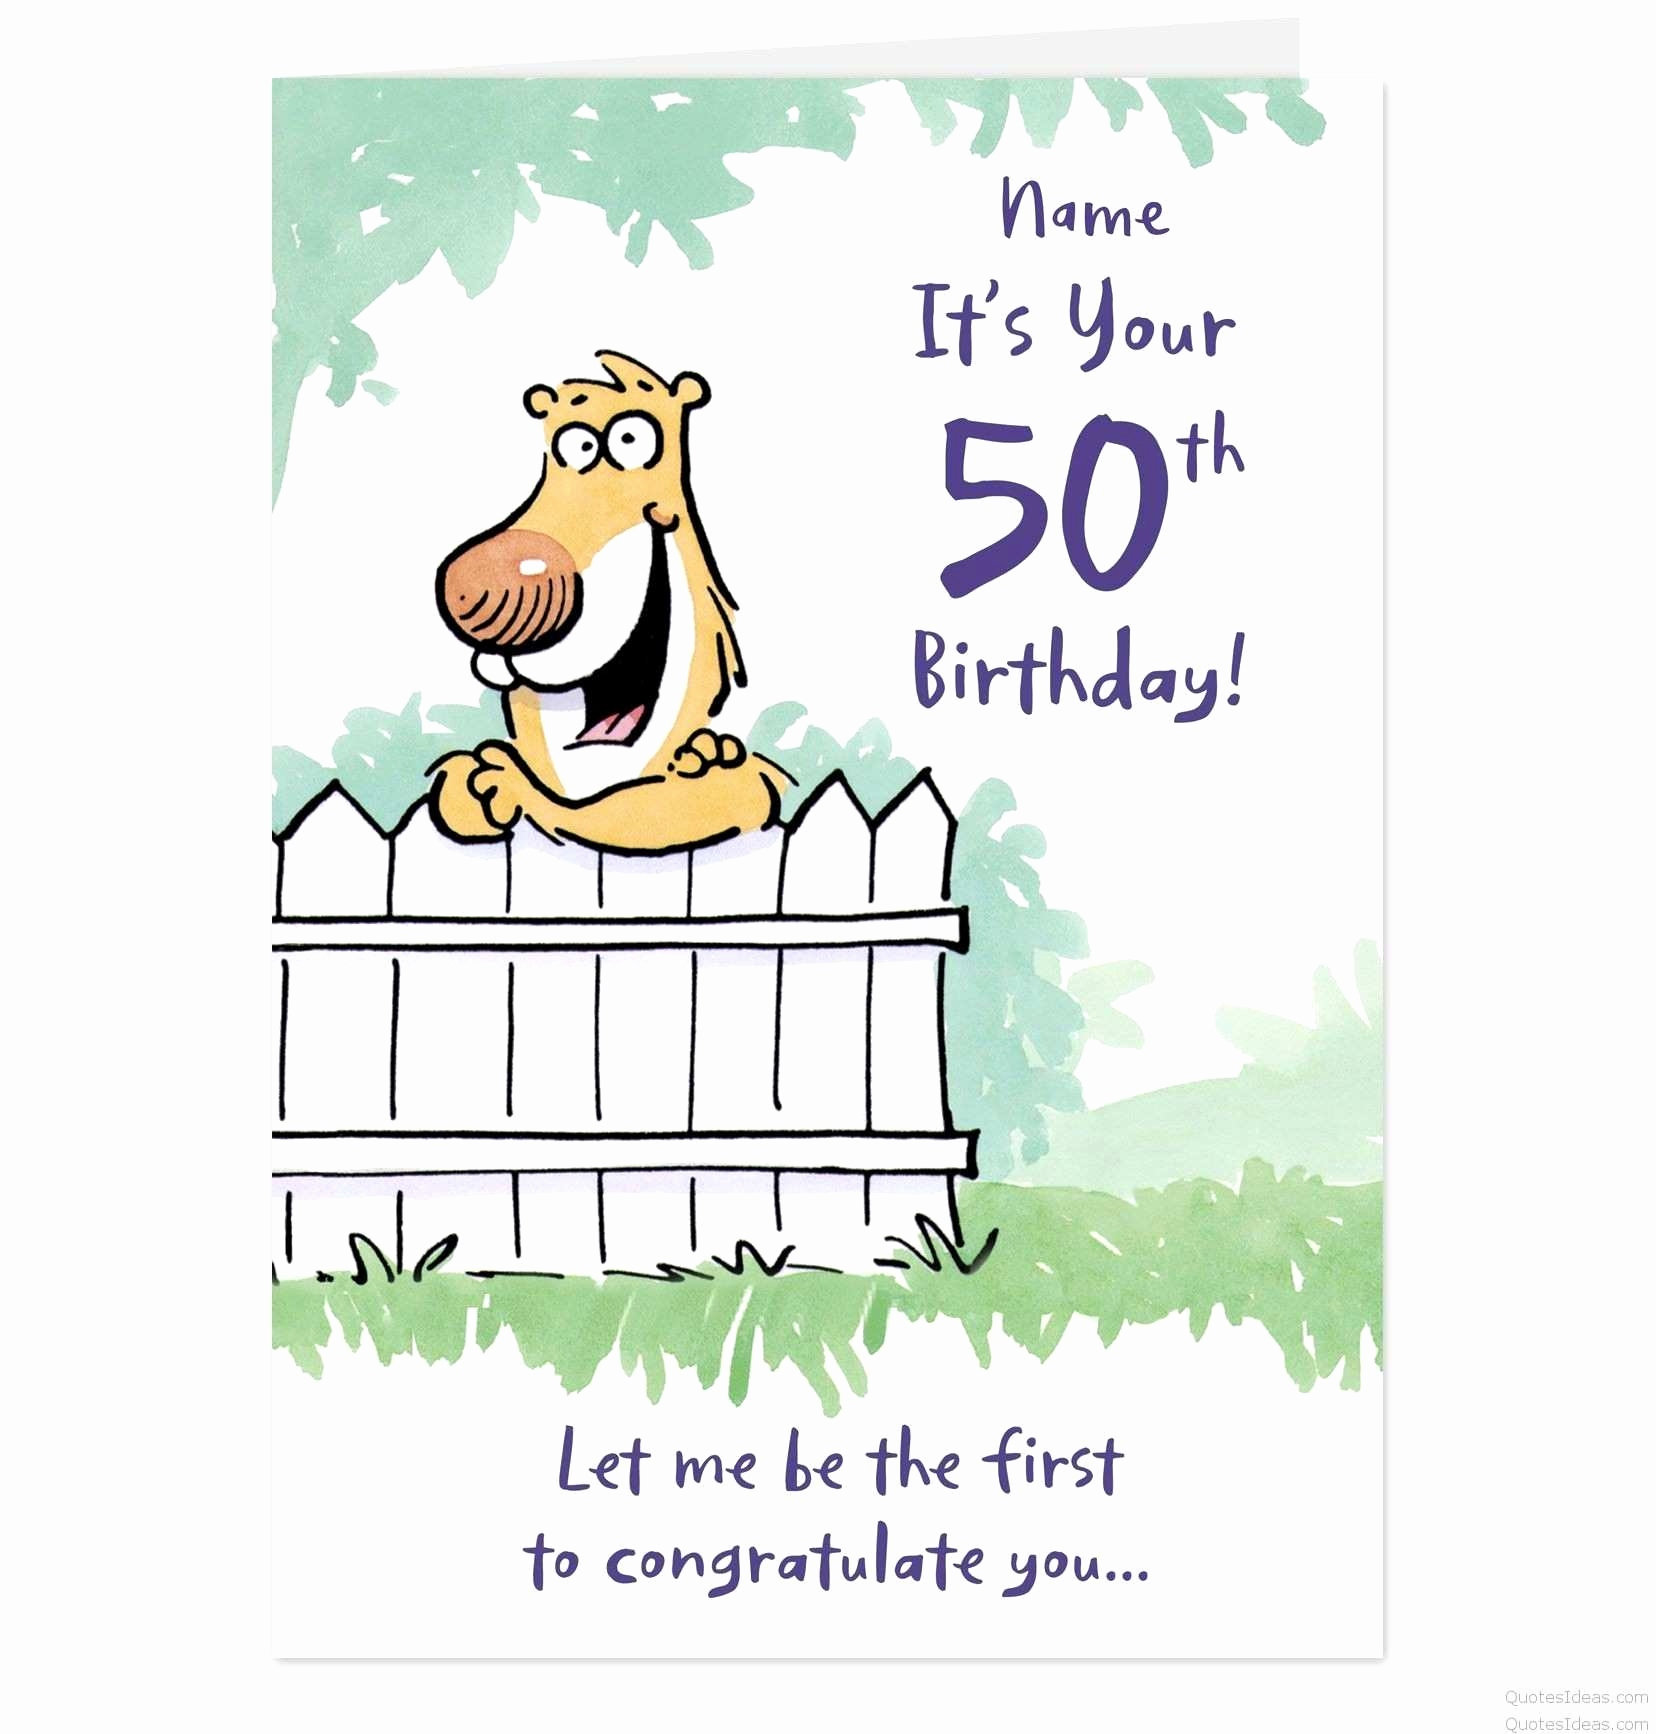 Funny Birthday Card Ideas Beautiful Cards Funny Birthday Card Ideas Remarkable Cute Birthday